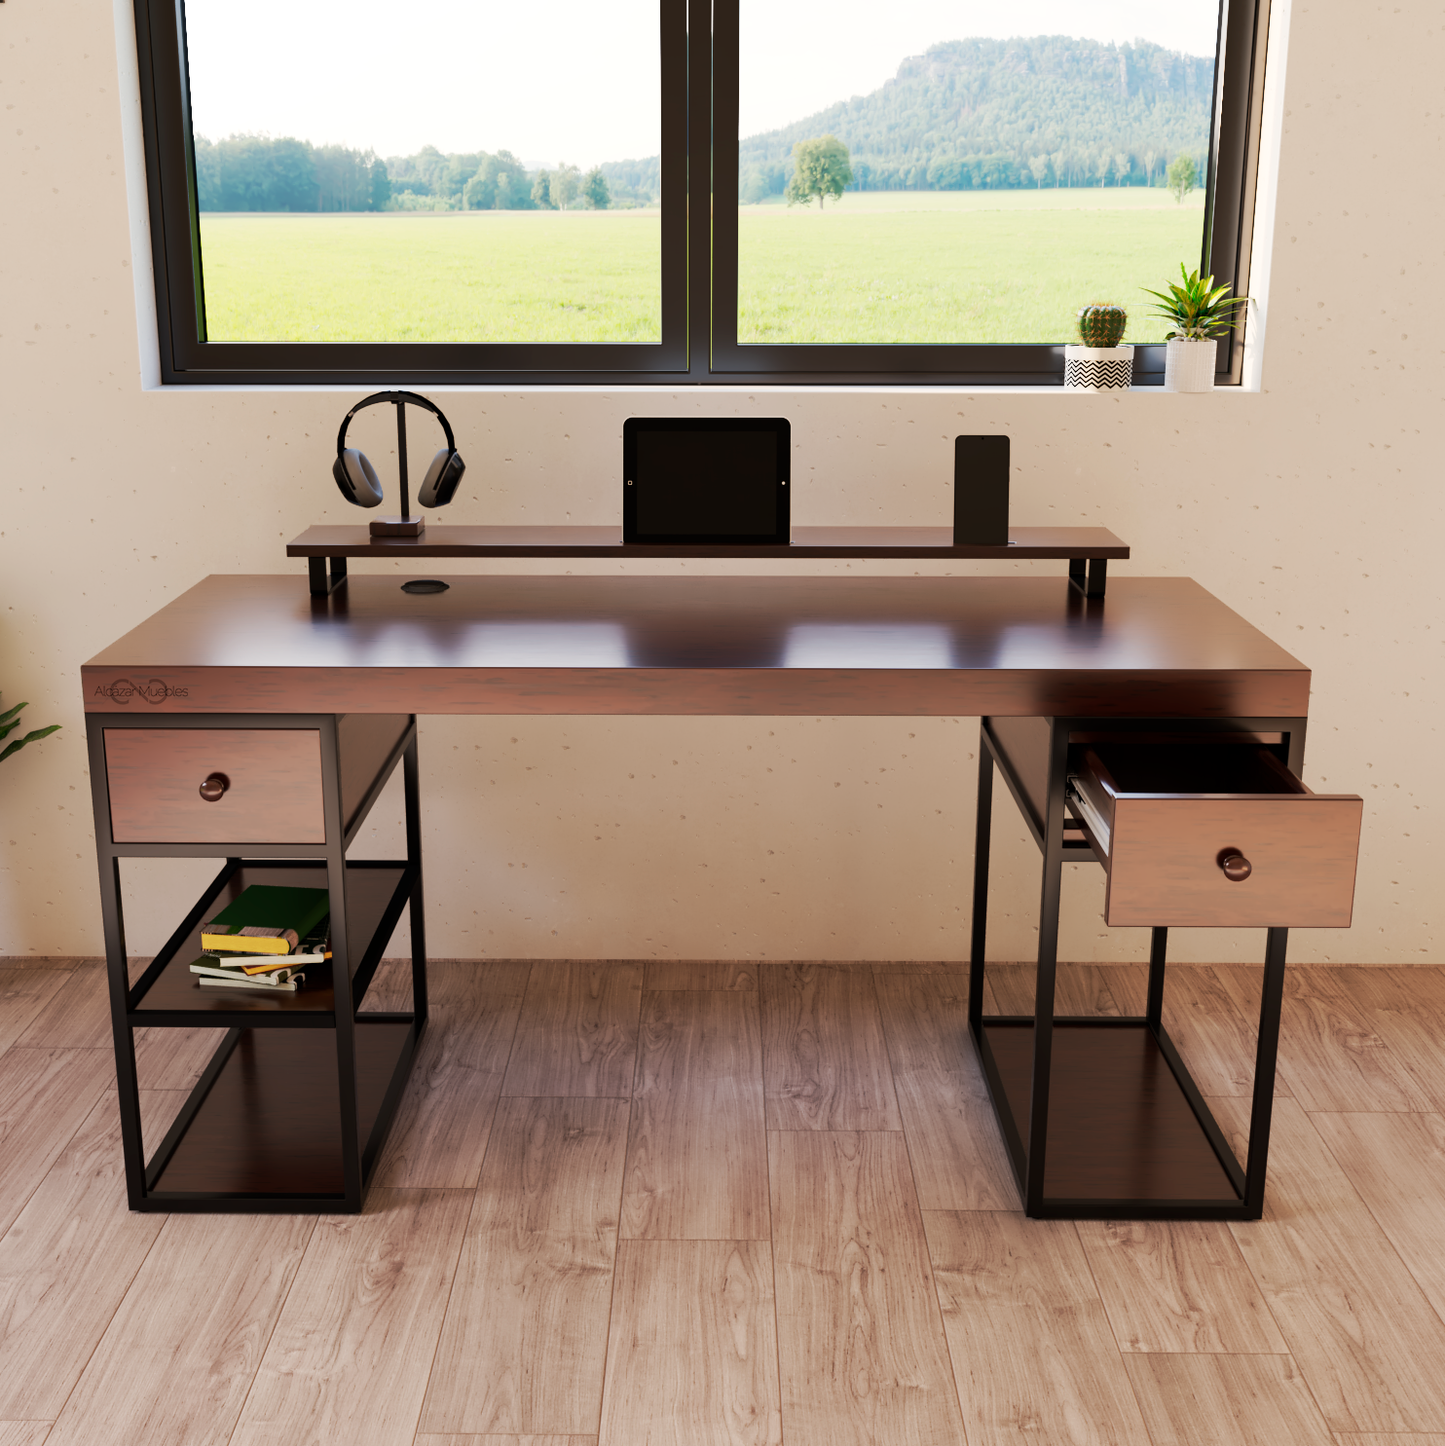 FTHOME Moderno Simple Madera Oficina De Oficina,Espacio-Ahorro